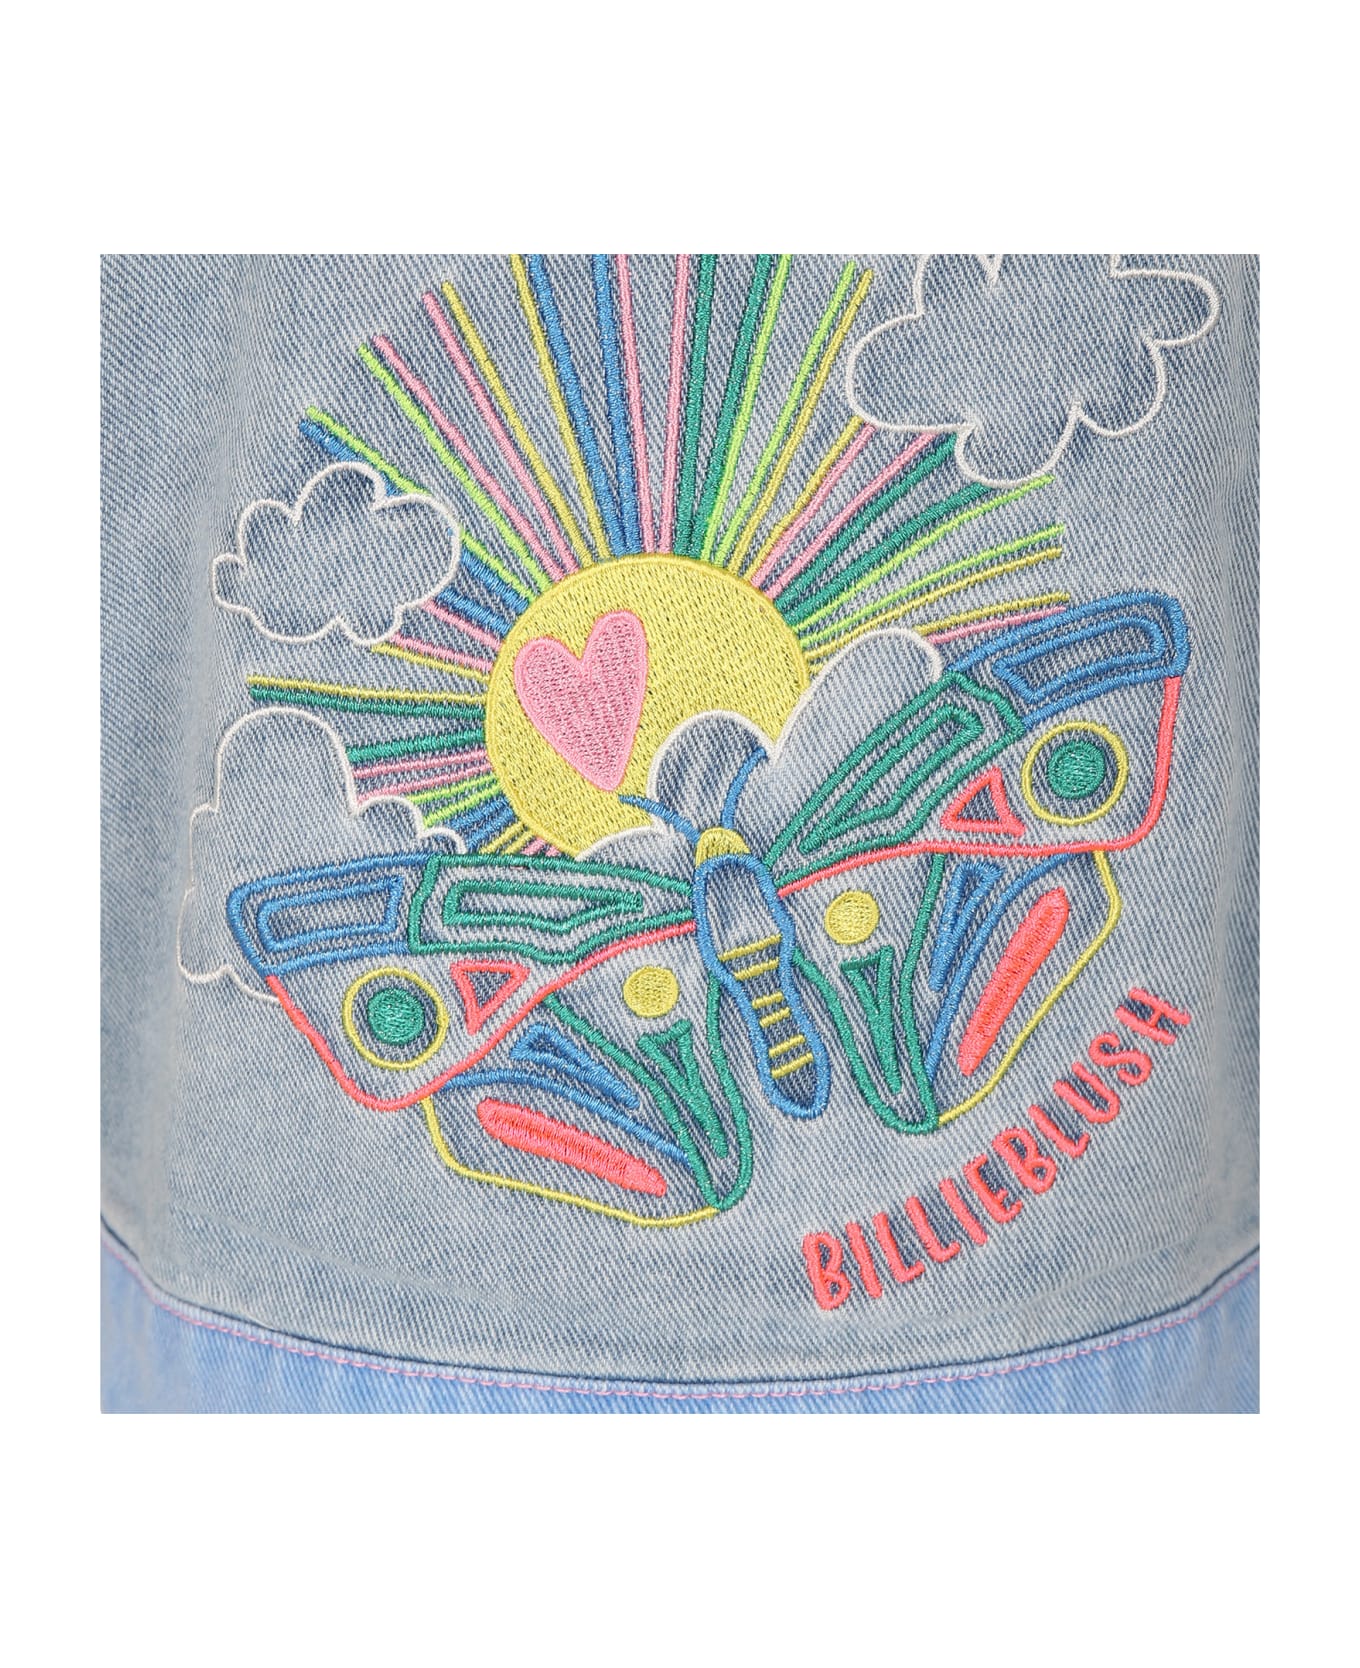 Billieblush Denim Vest For Girl With Multicolor Embroidered Print - Denim